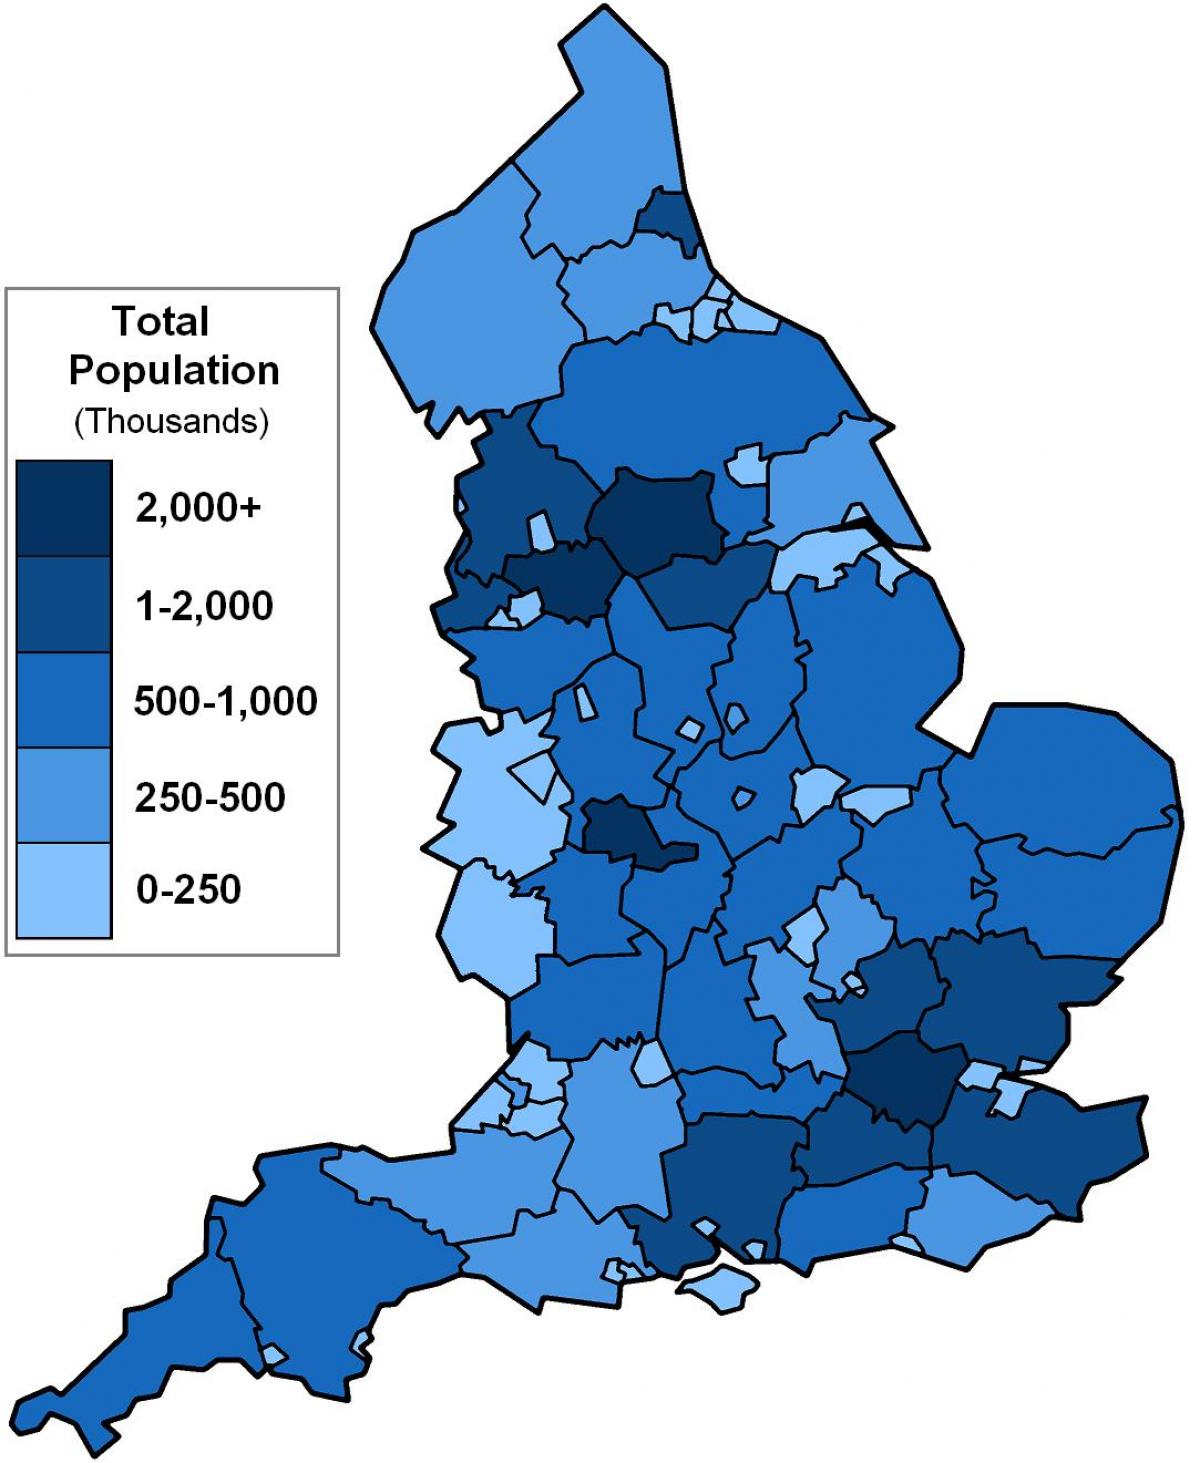 Bevölkerung in Großbritannienmap Karte der Bevölkerung in